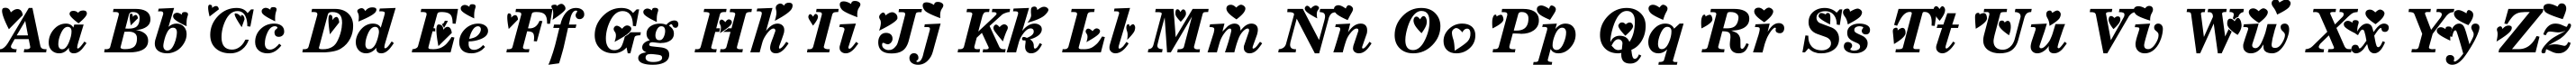 Пример написания английского алфавита шрифтом Times New Romance